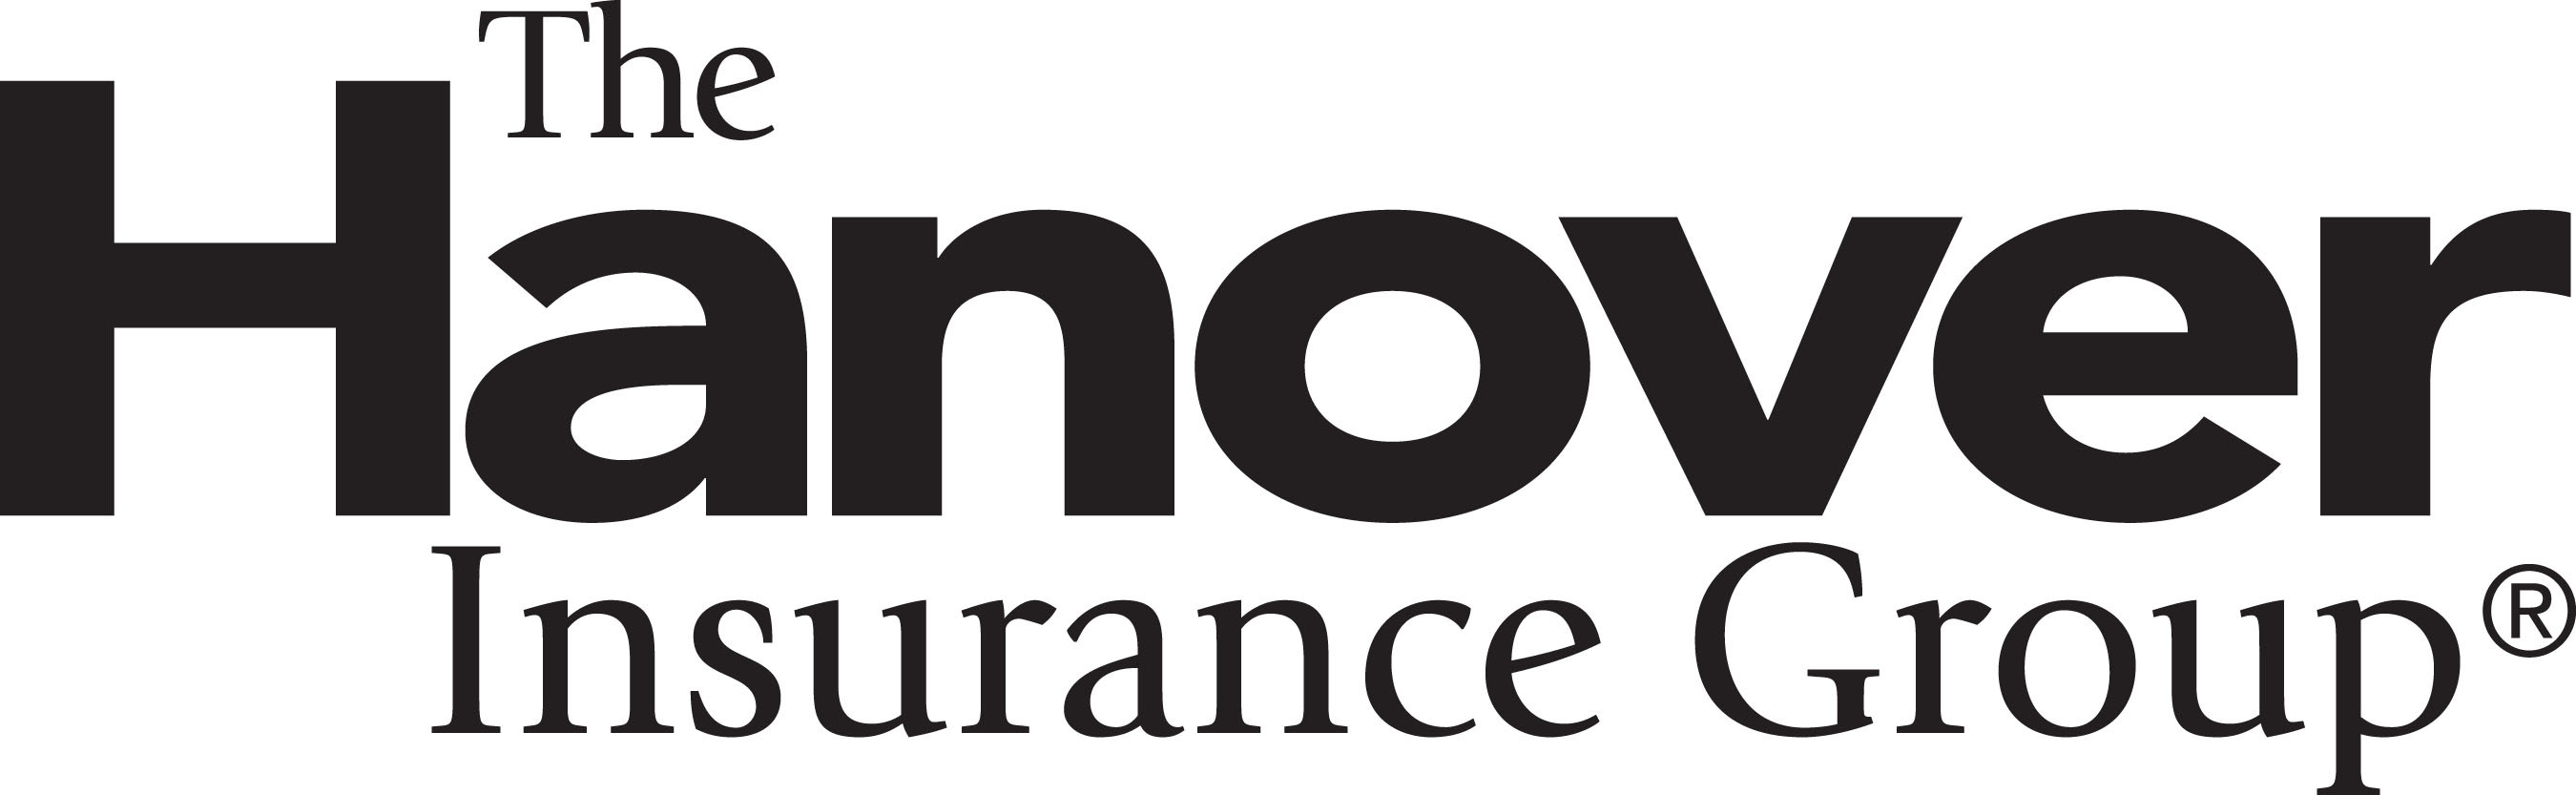 The Hanover Insurance Group, Inc. Logo.